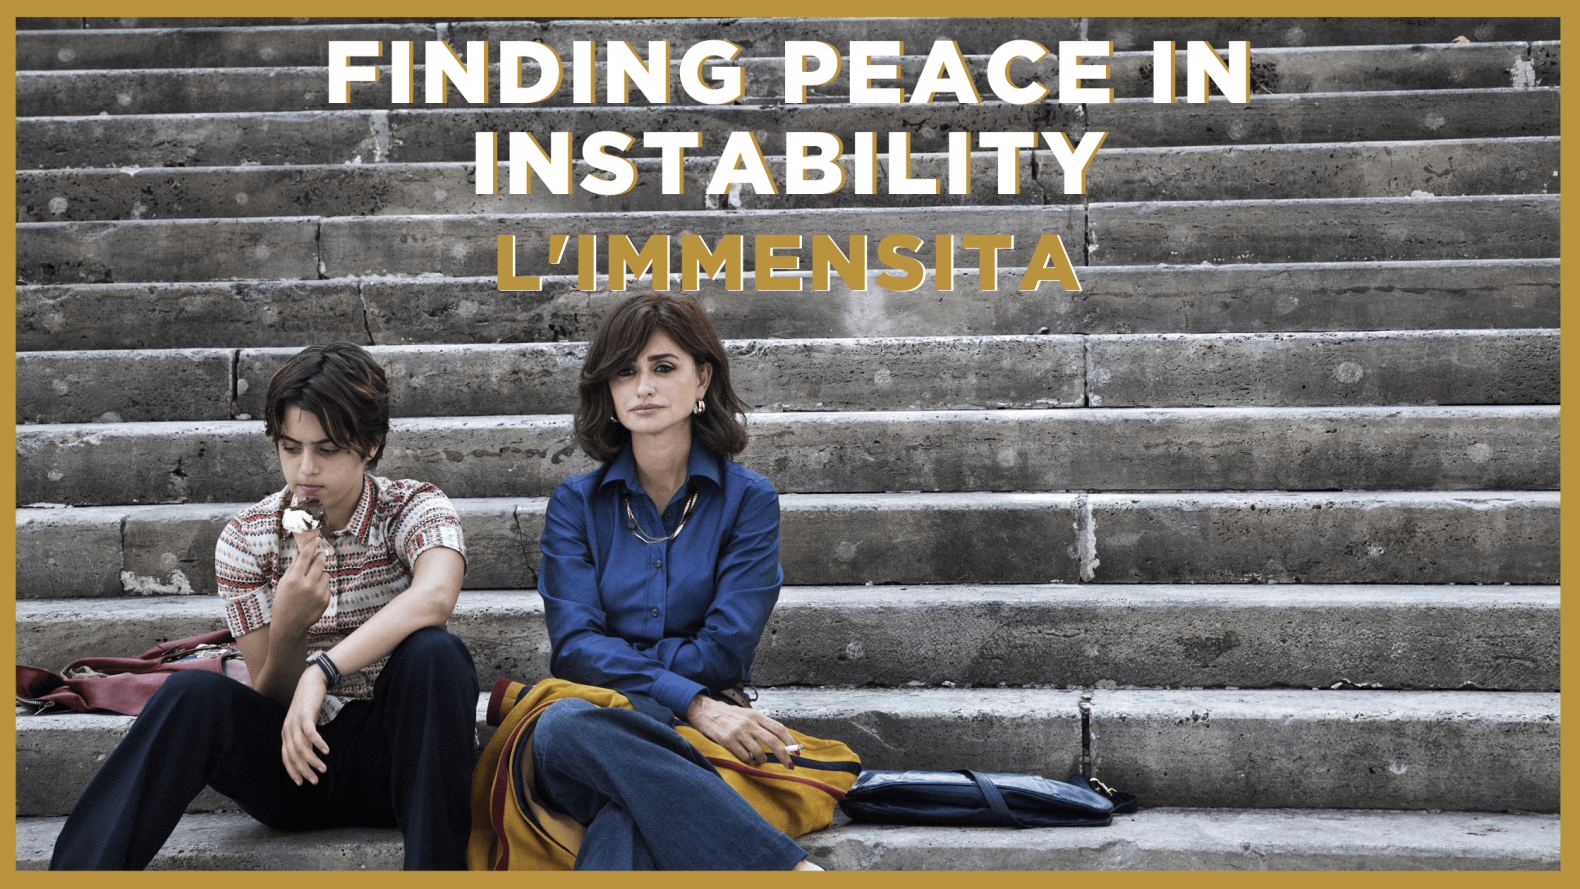 L'IMMENSITA - Finding Peace in Instability